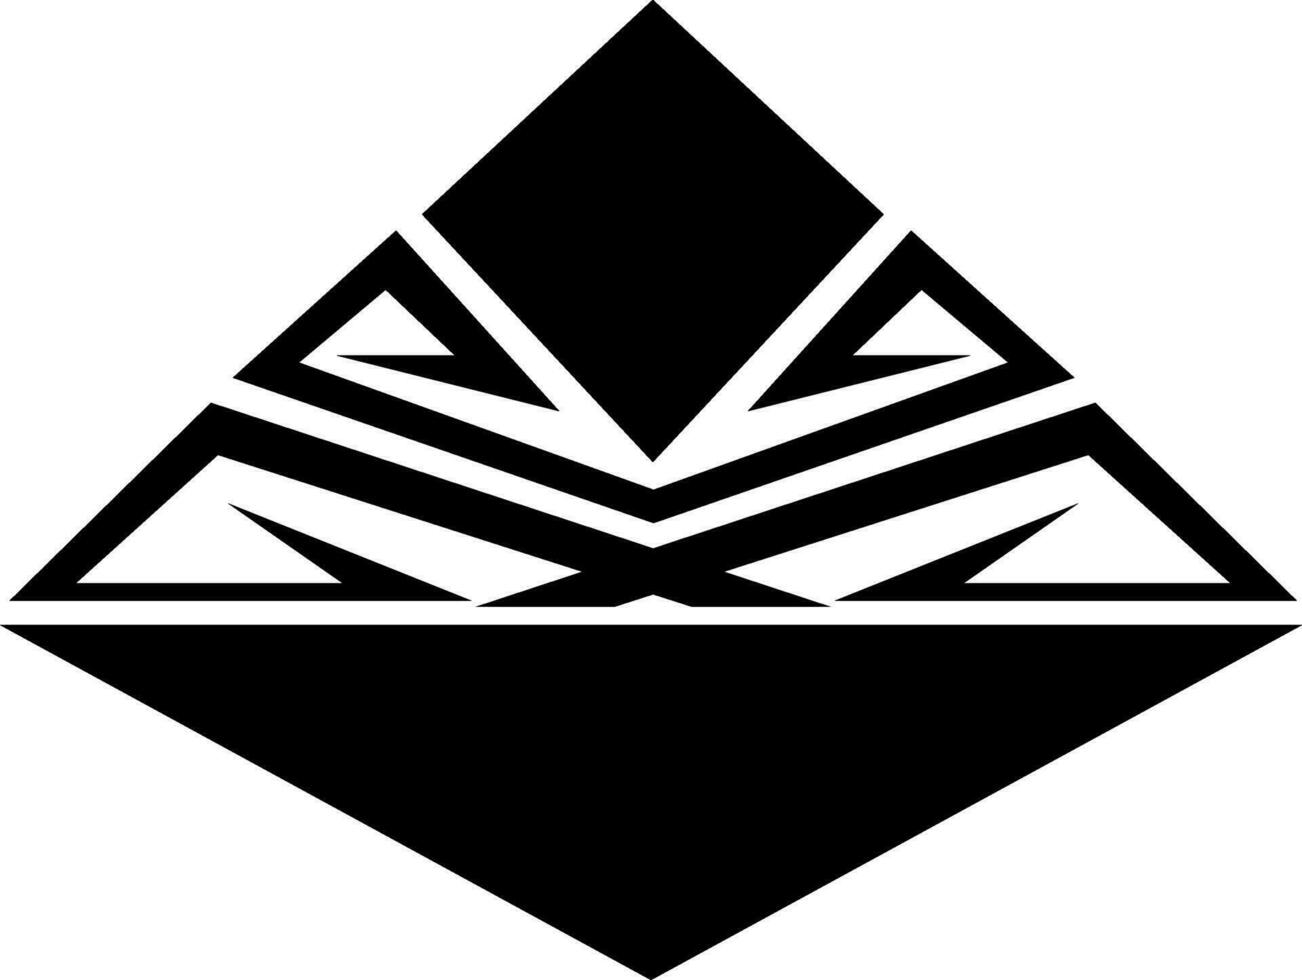 Black pyramid tattoo, tattoo illustration, vector on a white background.